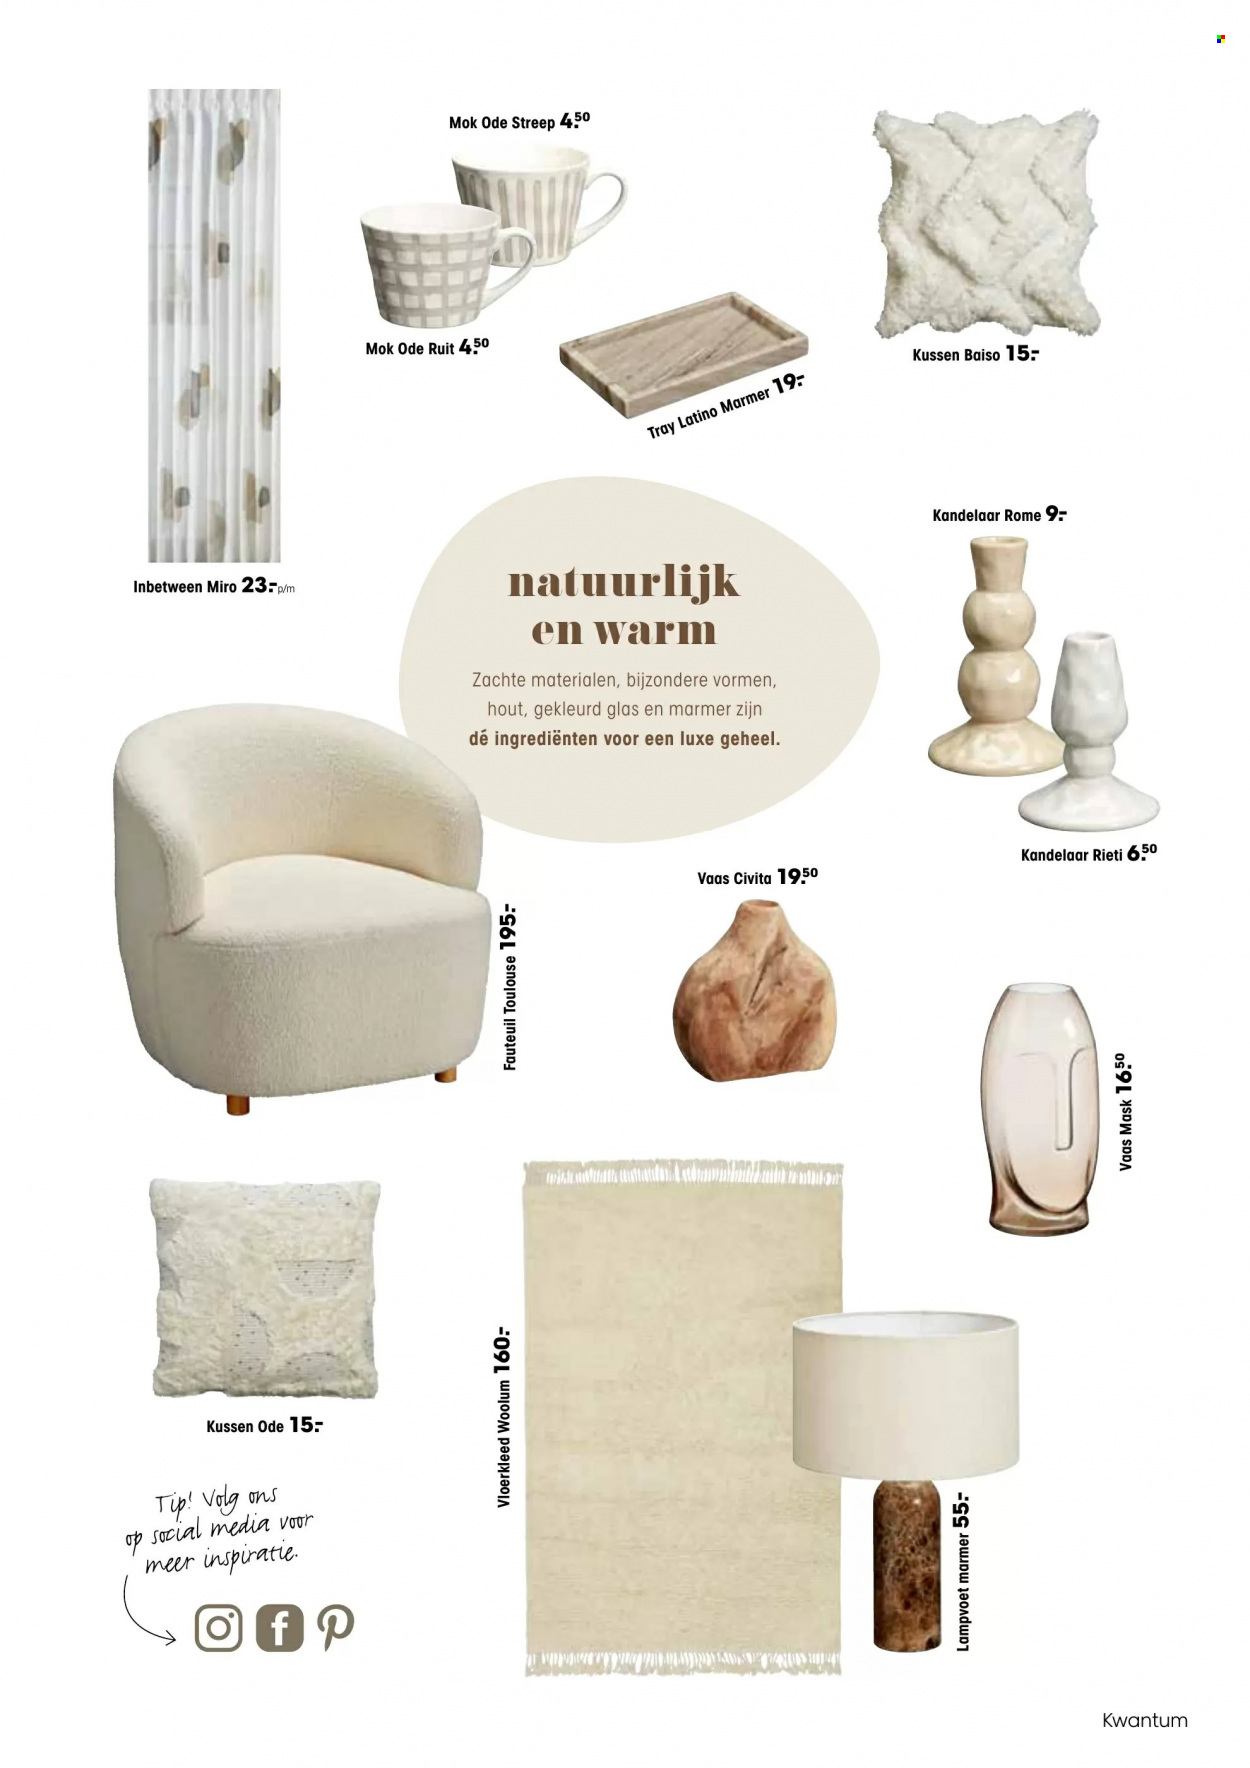 thumbnail - Kwantum-aanbieding -  producten in de aanbieding - fauteuil, kandelaar, vaas. Pagina 3.